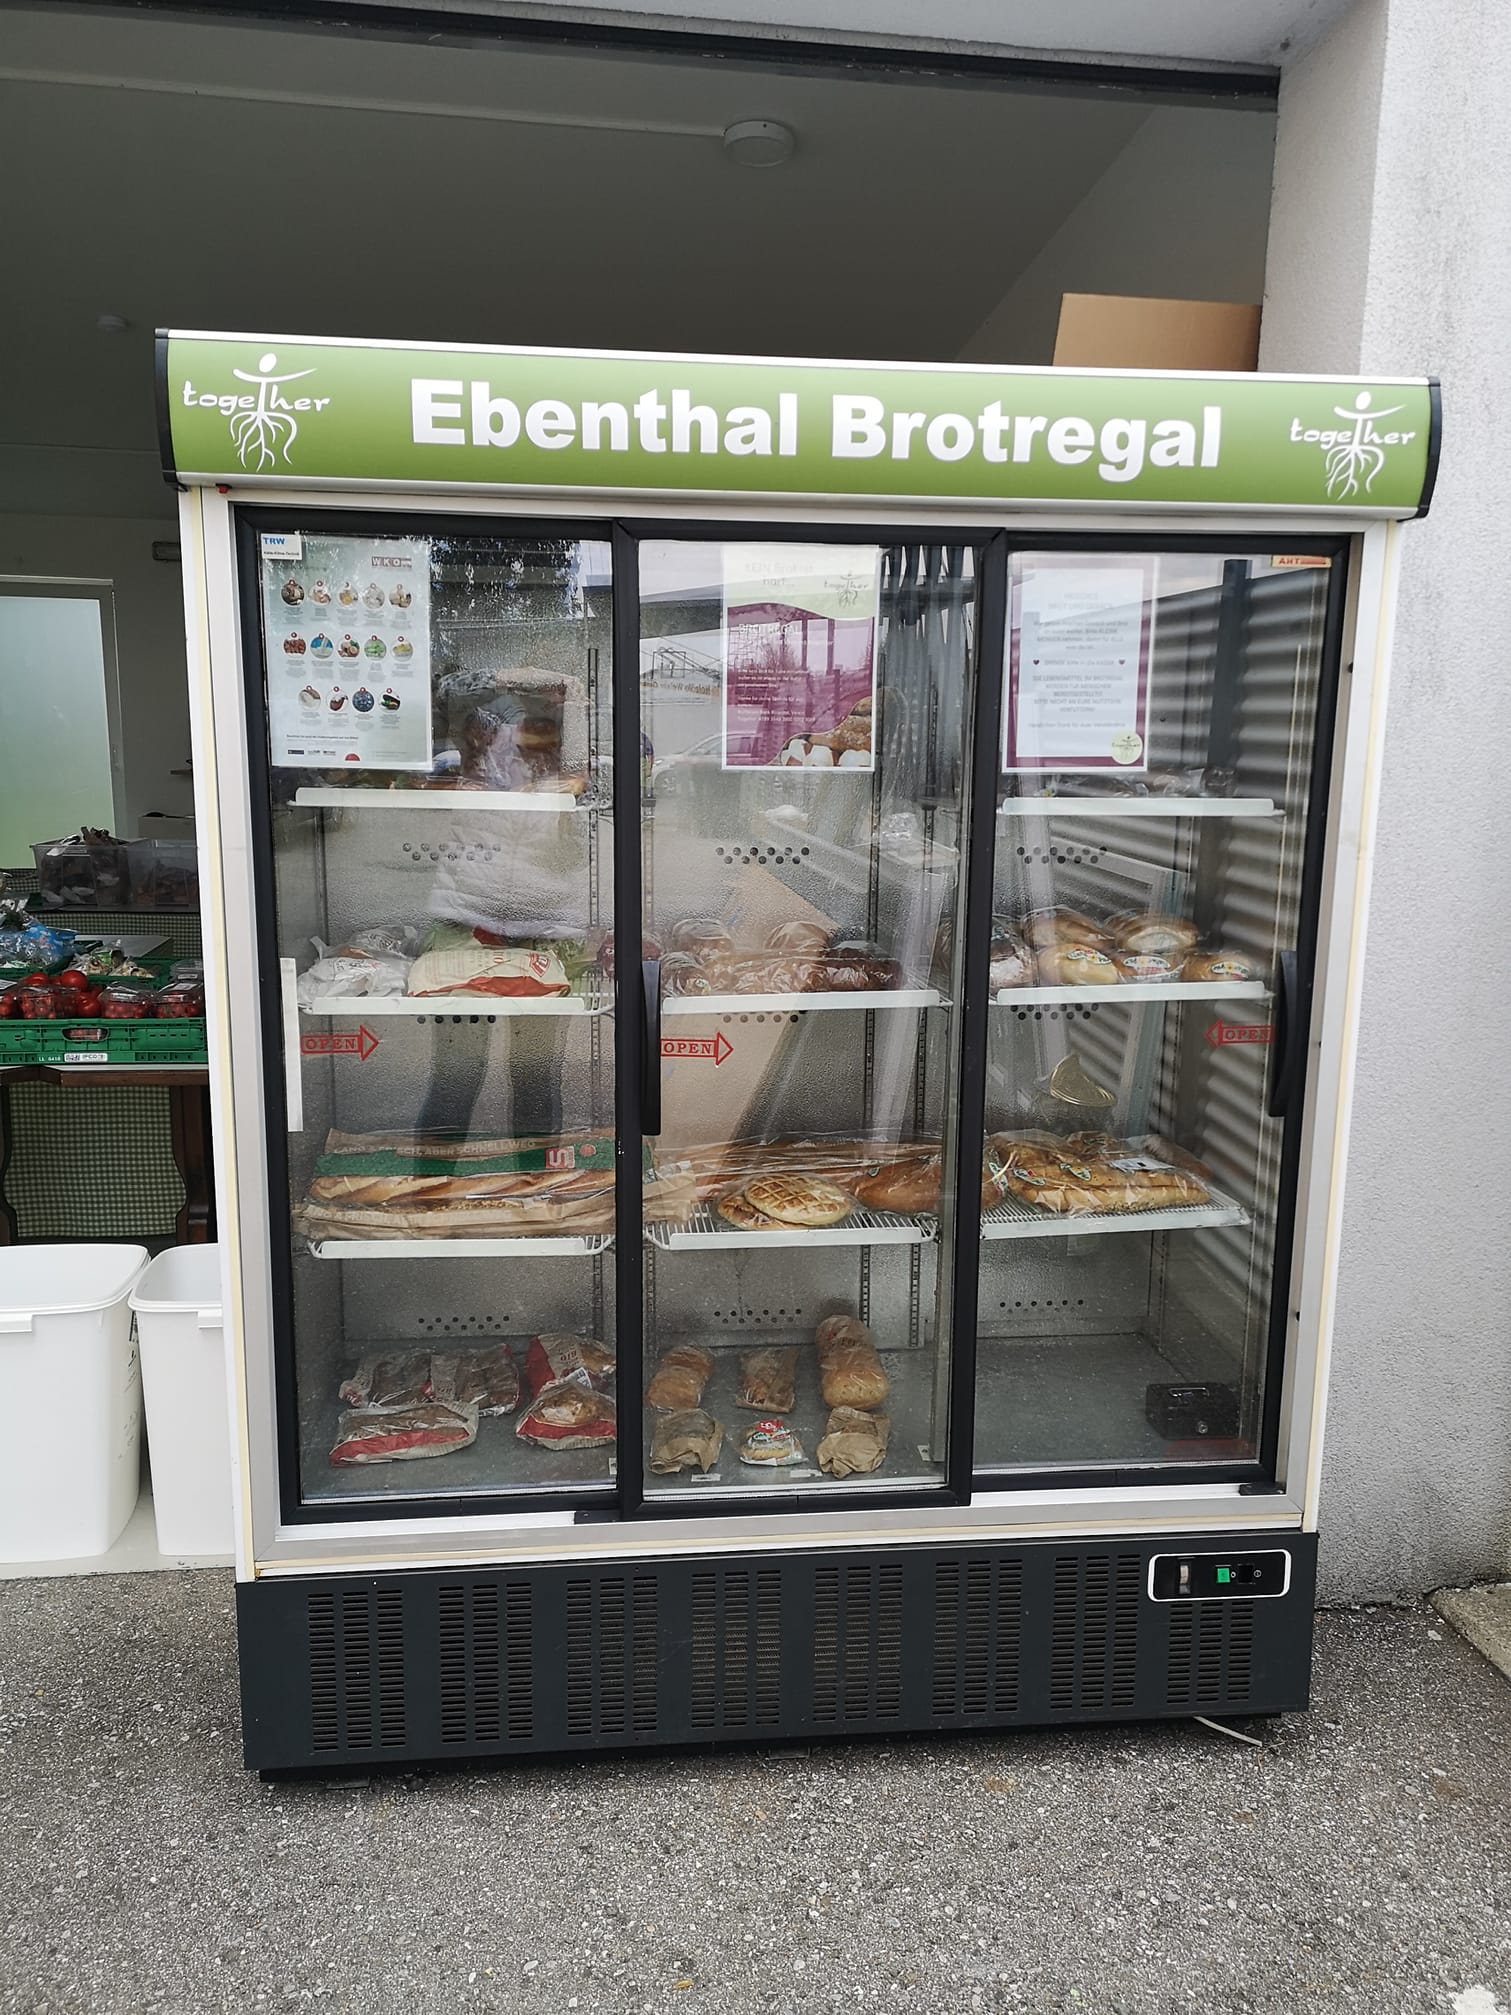 Neues Brotregal für Ebenthal